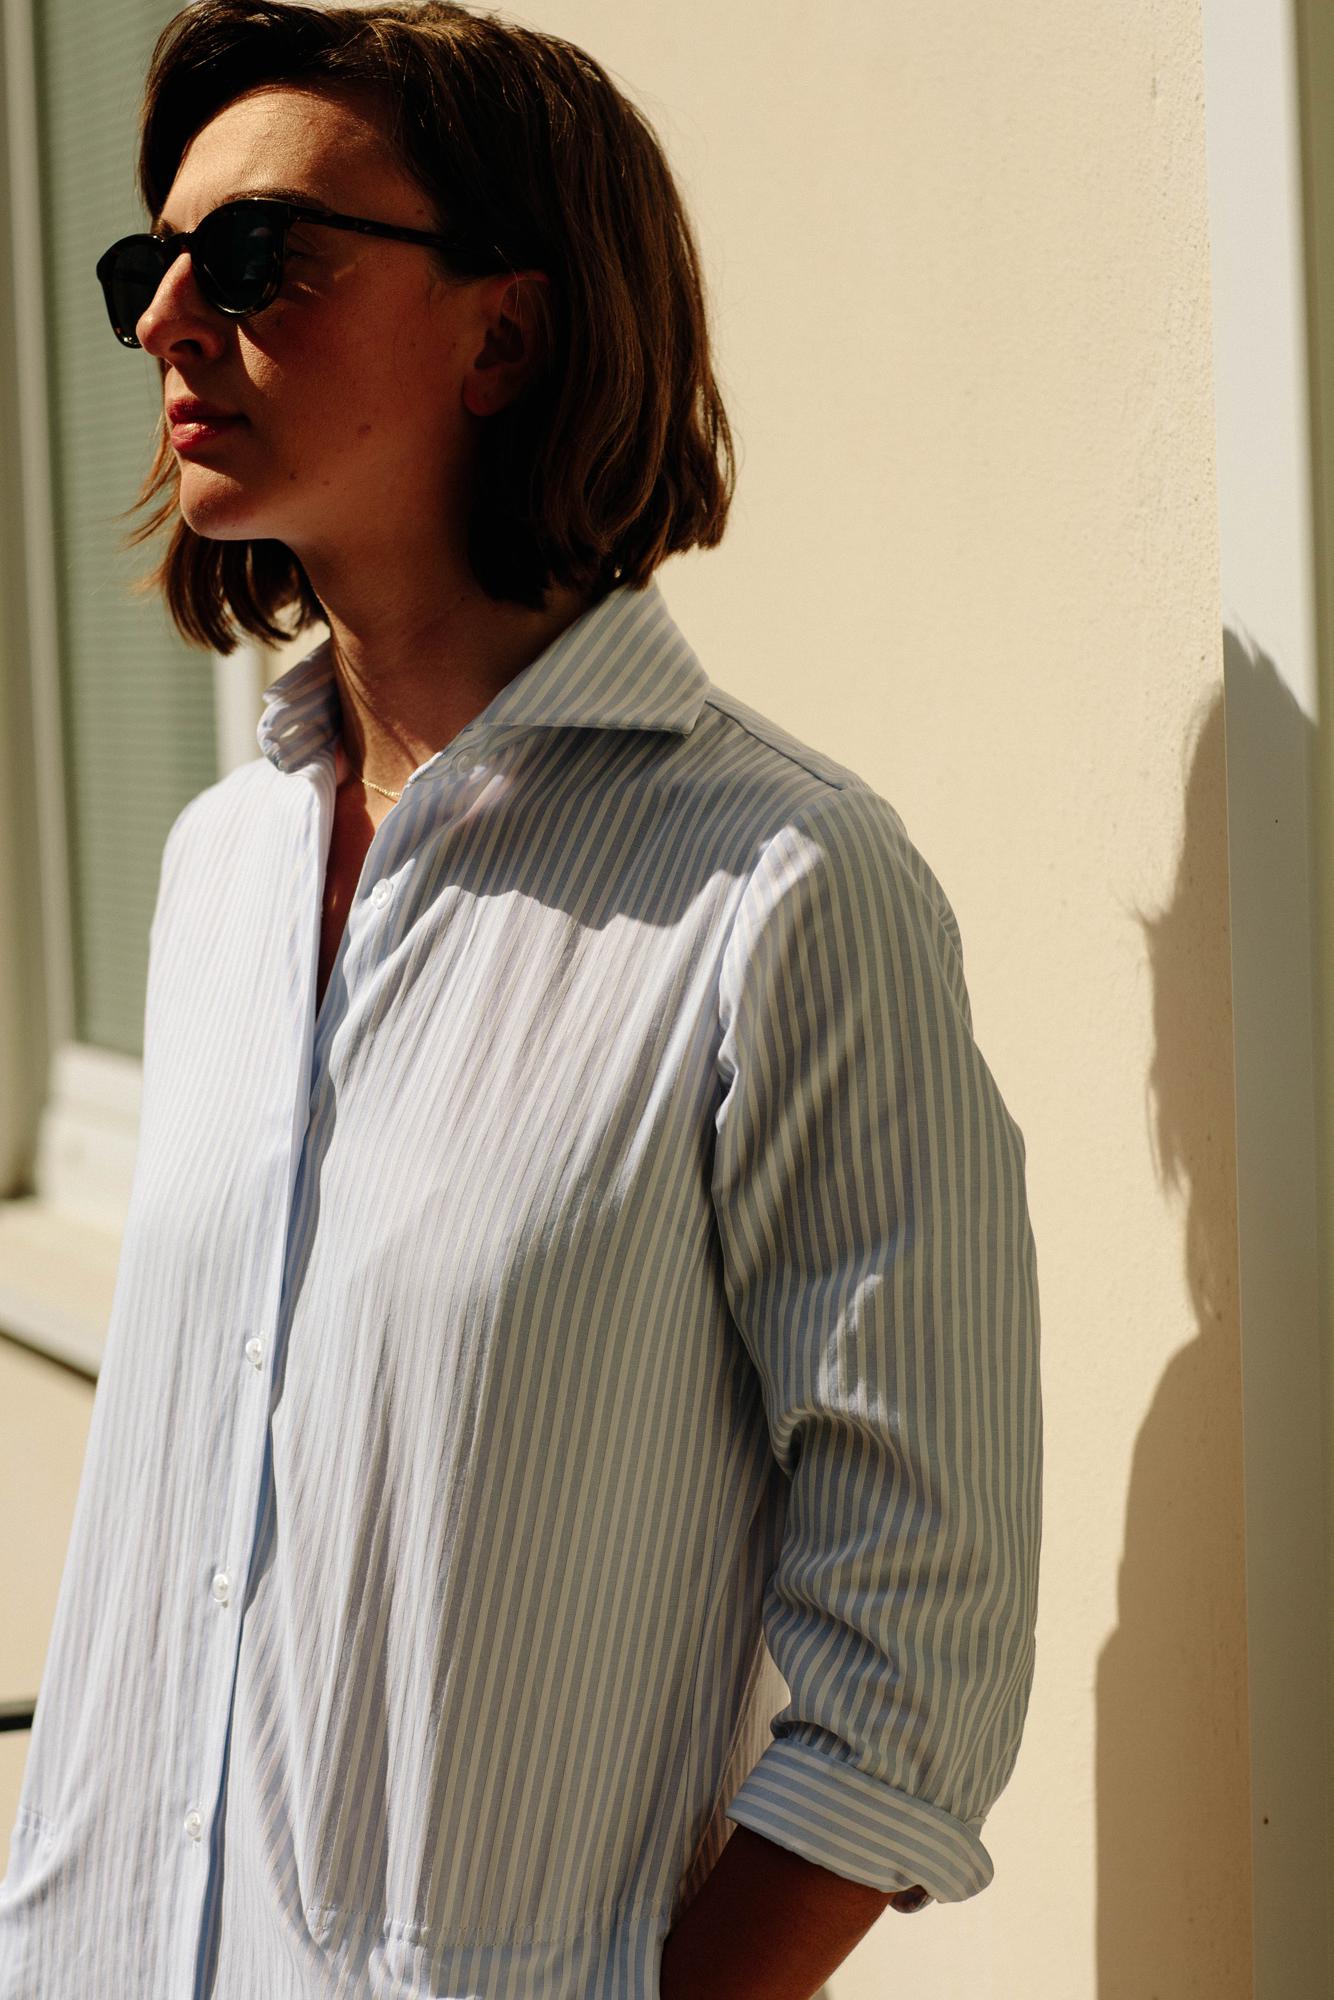 RYAN ¾ Sleeve Shirtdress - Light Blue and White Stripe